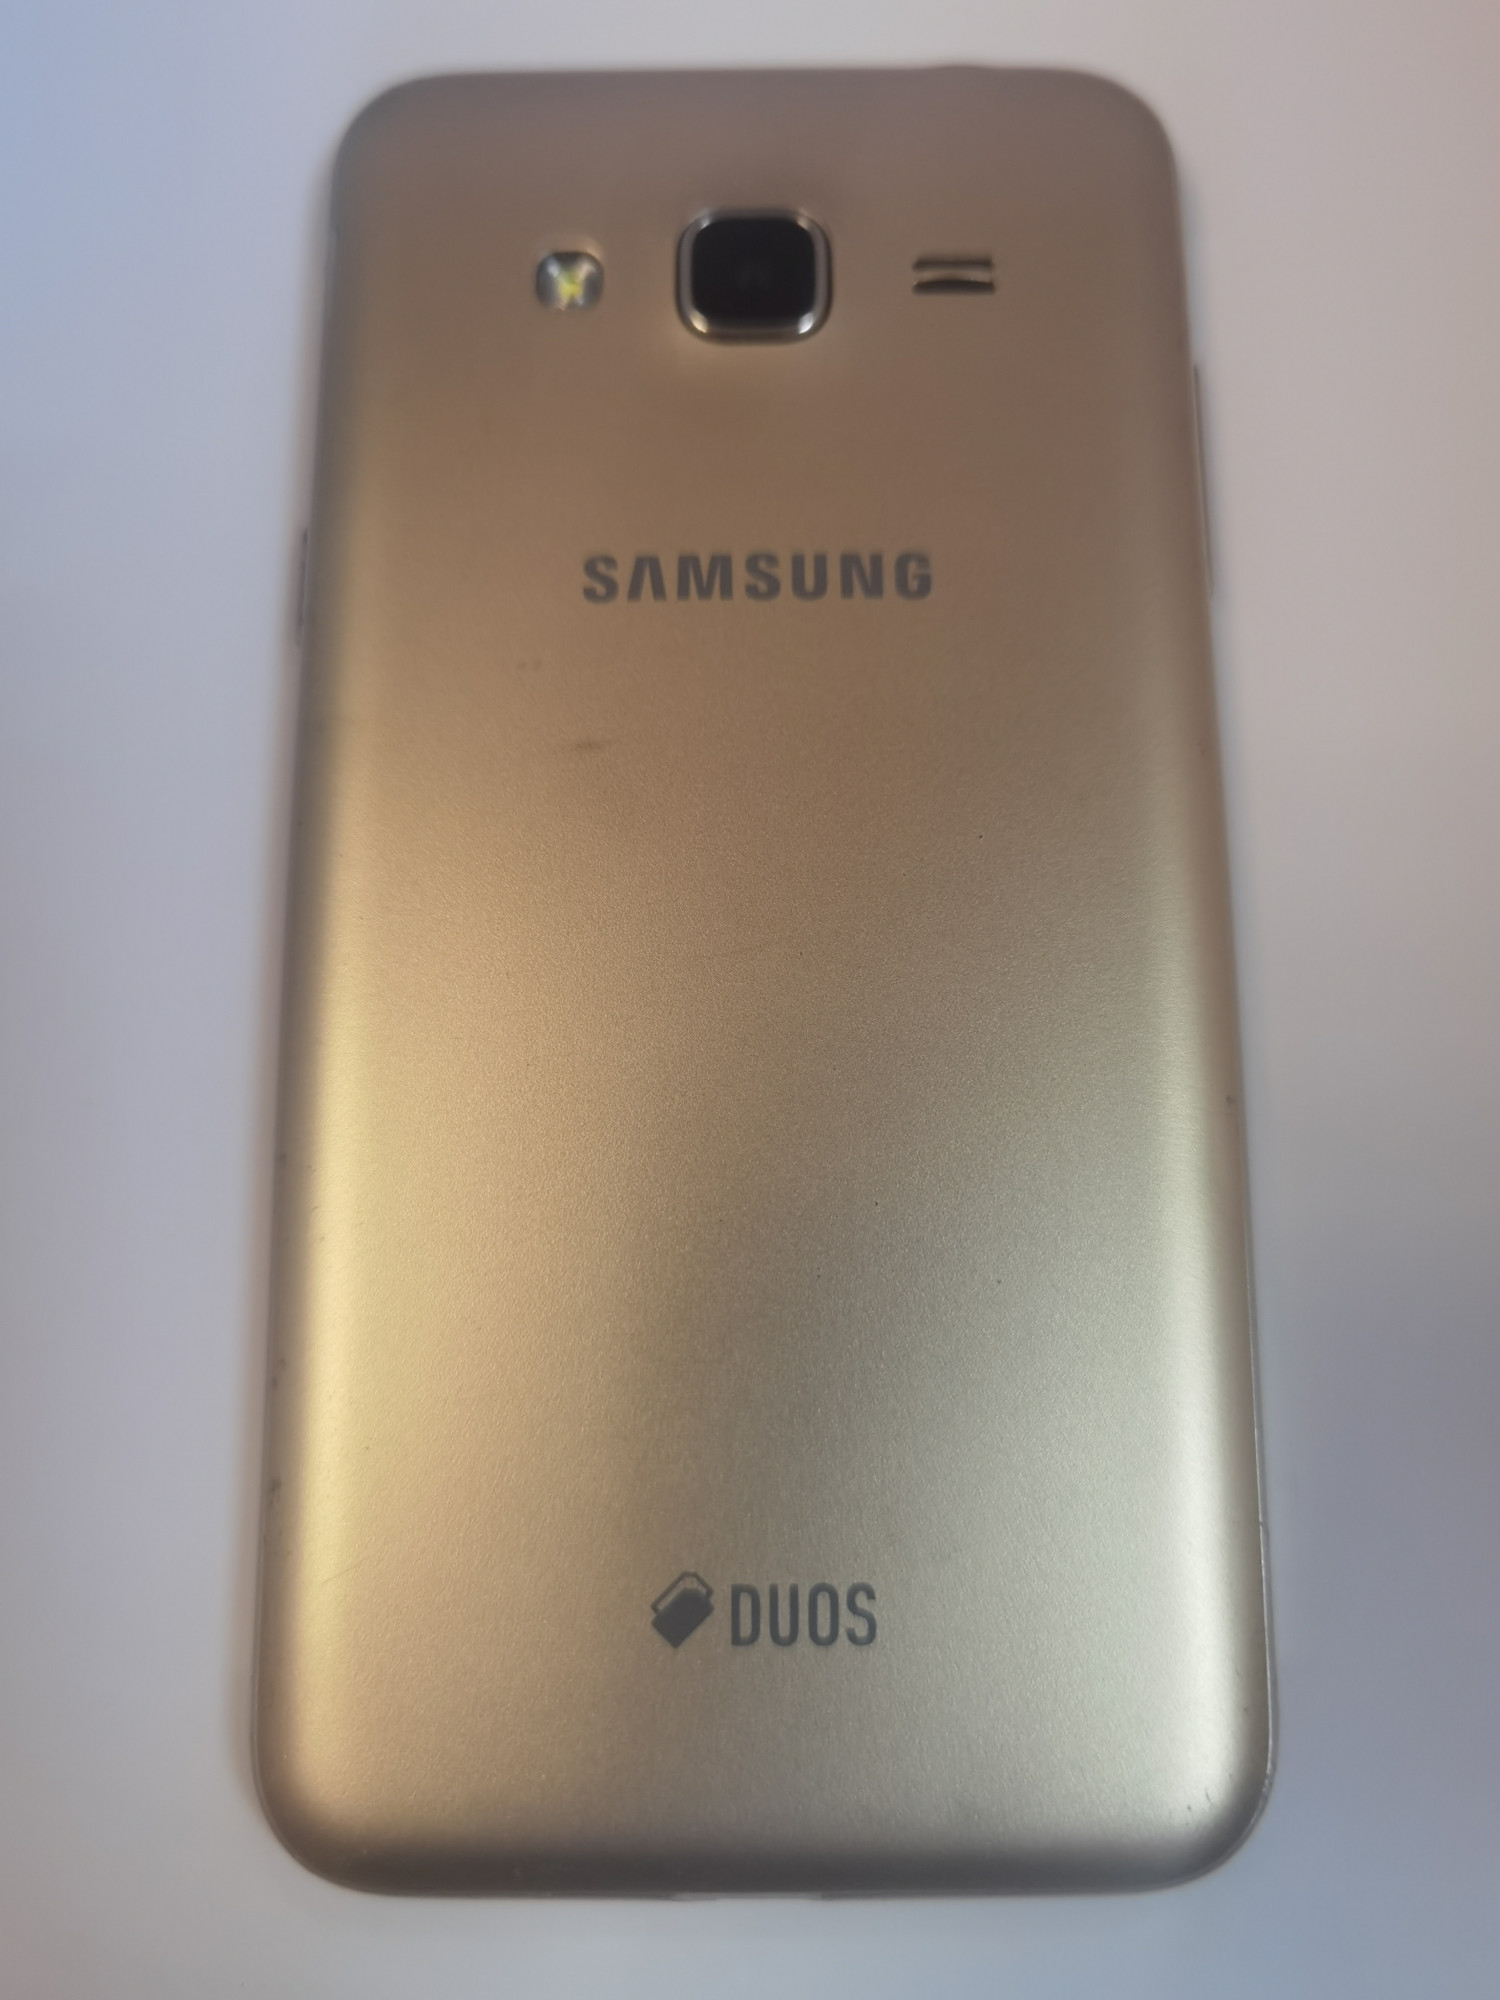 Samsung Galaxy J3 2016 Gold (SM-J320HZDD) 1/8Gb 4